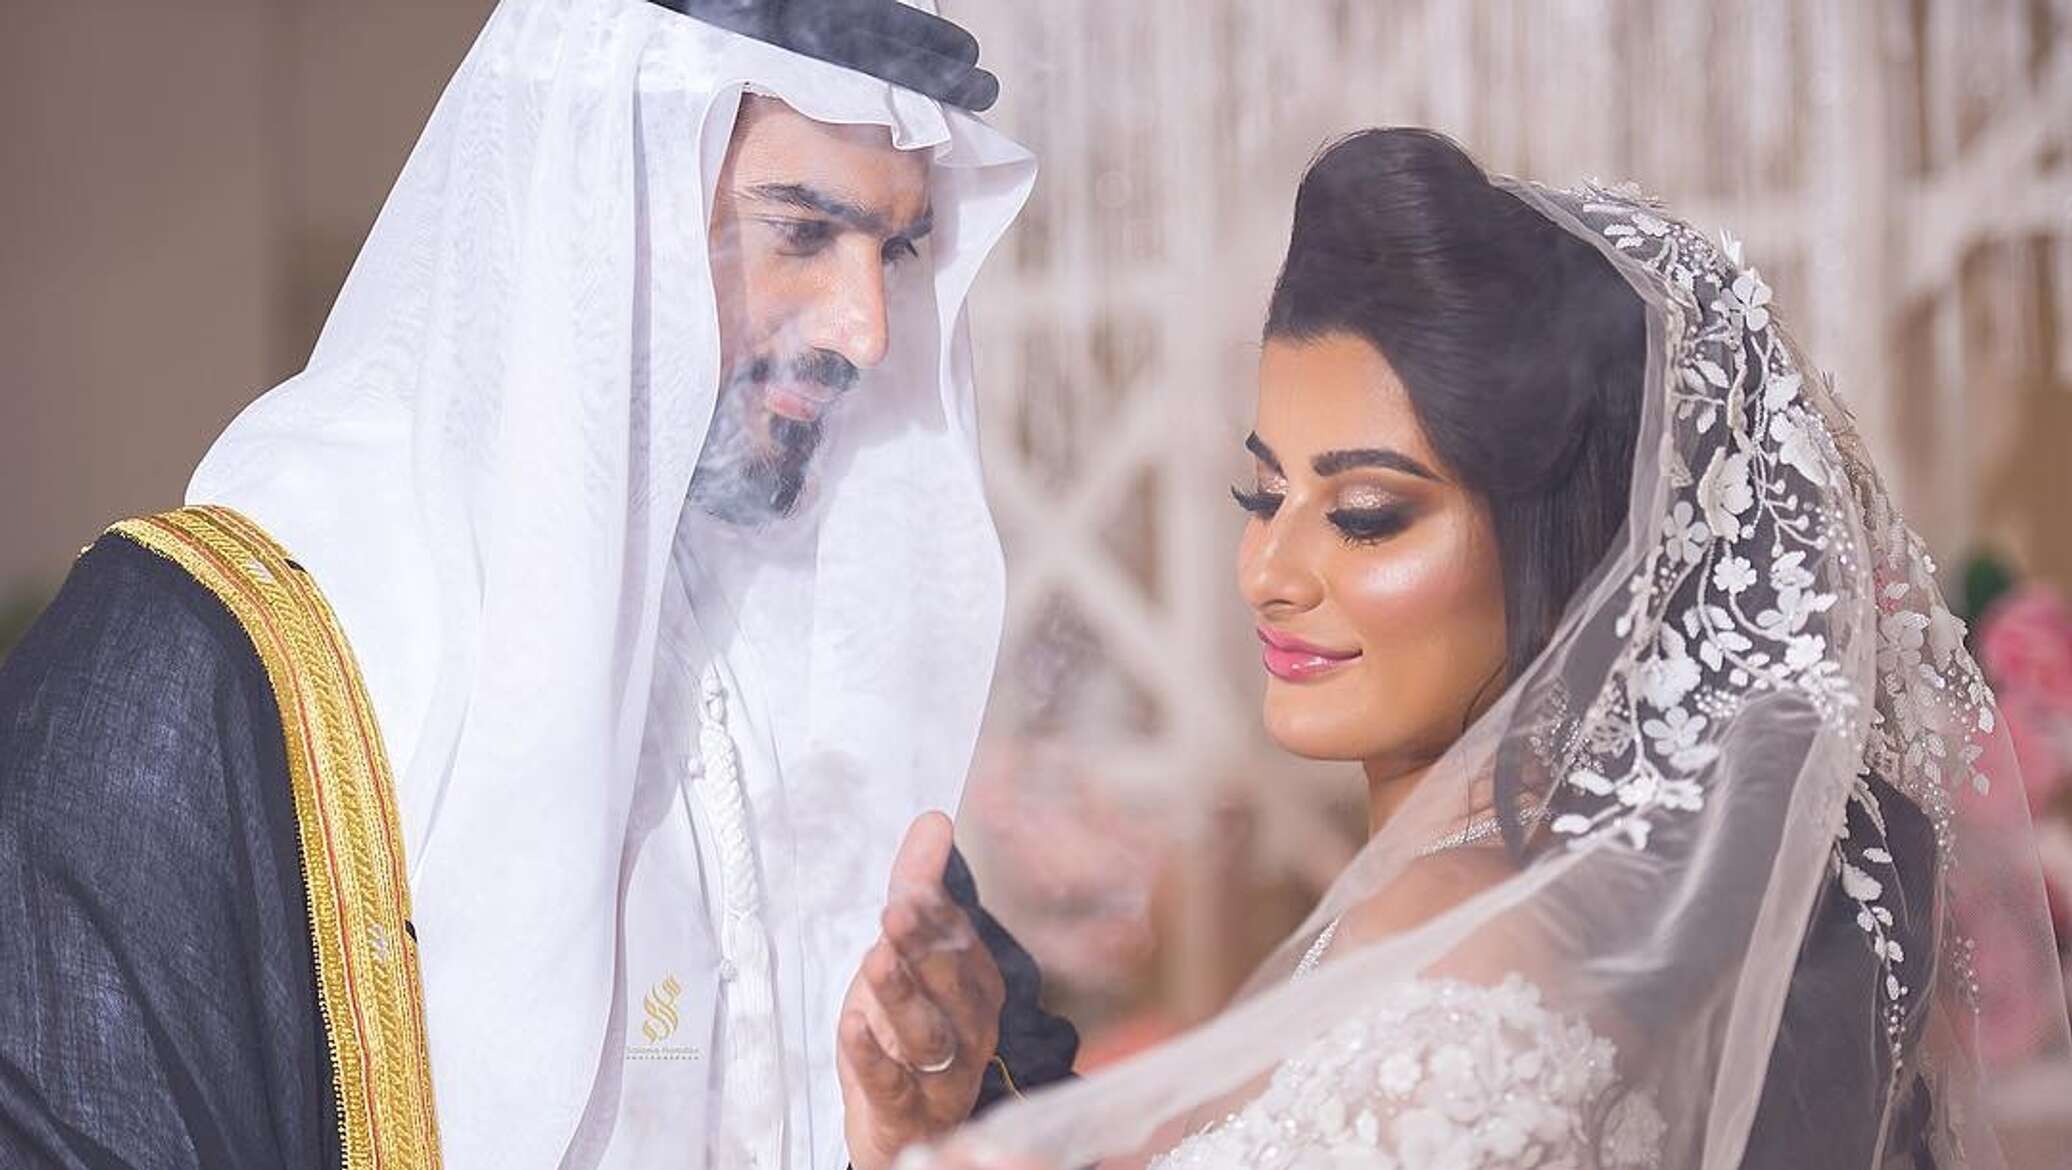 Plus size для шейха свадьбы не будет. Свадьба арабского шейха. Невесты арабских шейхов. Невеста шейха. Жены арабских шейхов.